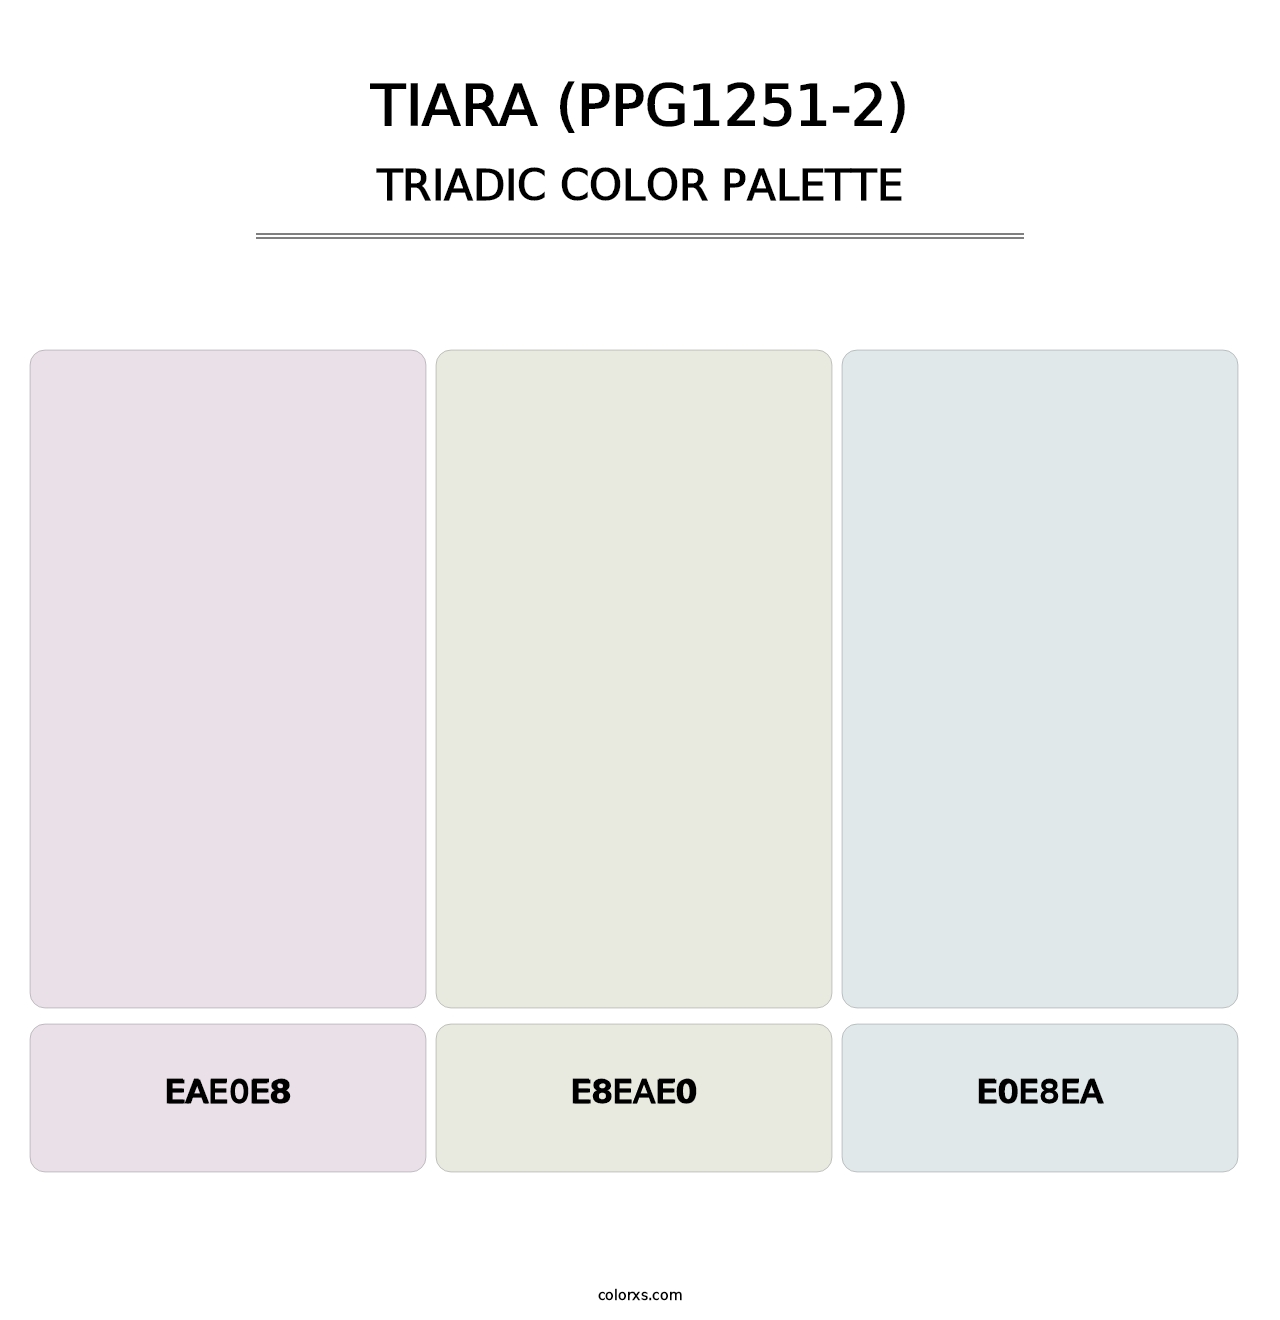 Tiara (PPG1251-2) - Triadic Color Palette